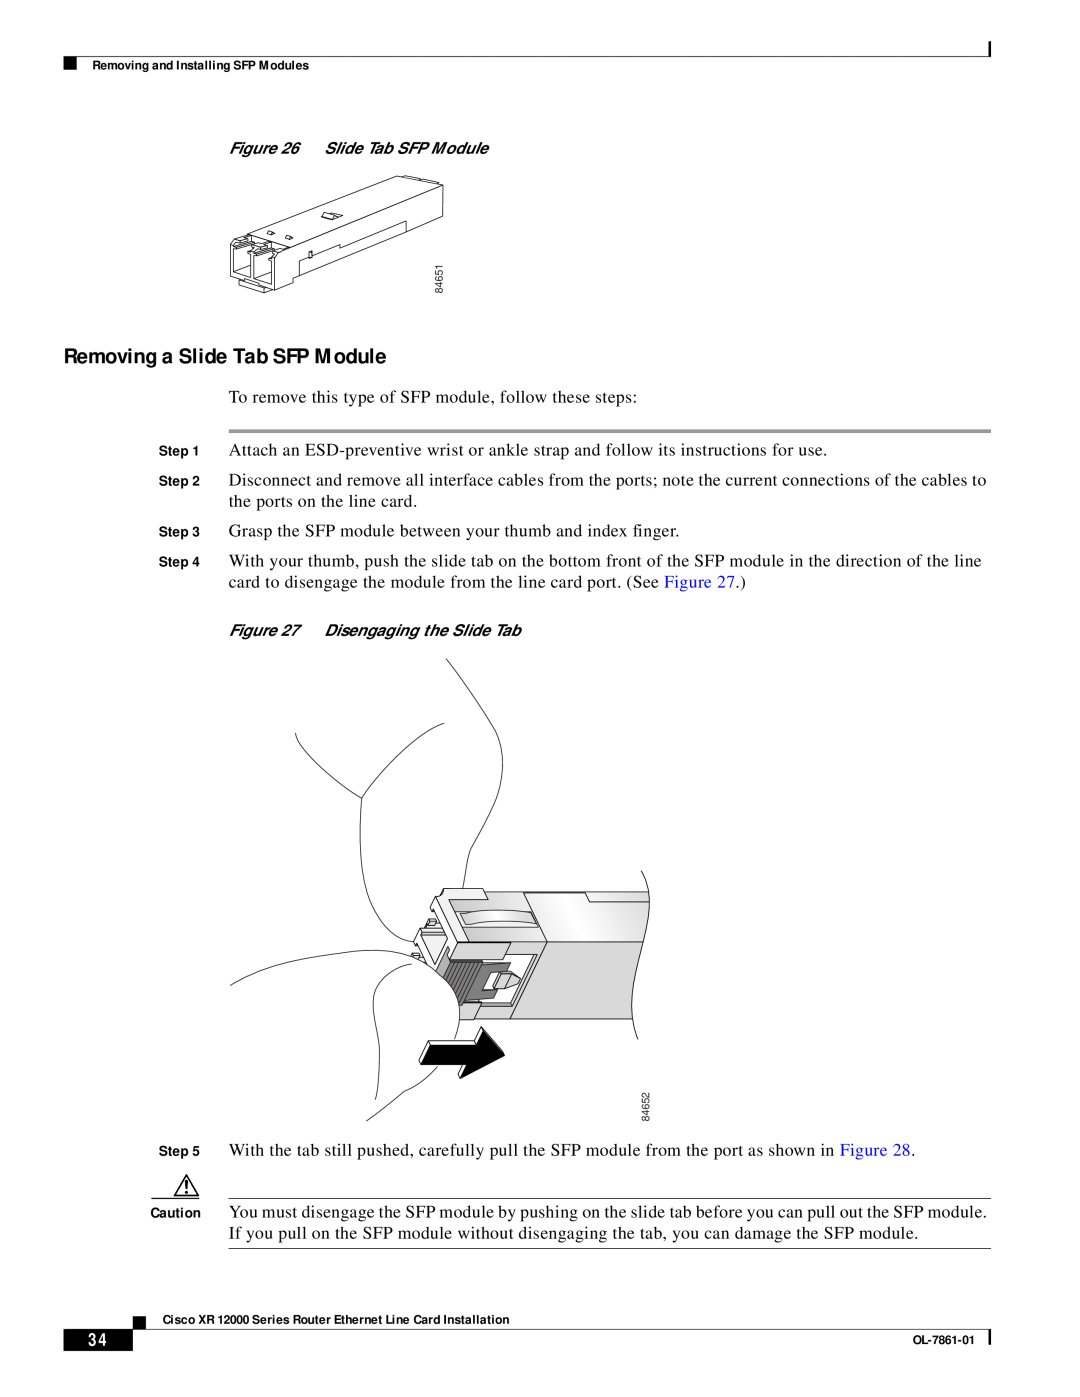 Cisco Systems OL-7861-01 manual Removing a Slide Tab SFP Module, Disengaging the Slide Tab 